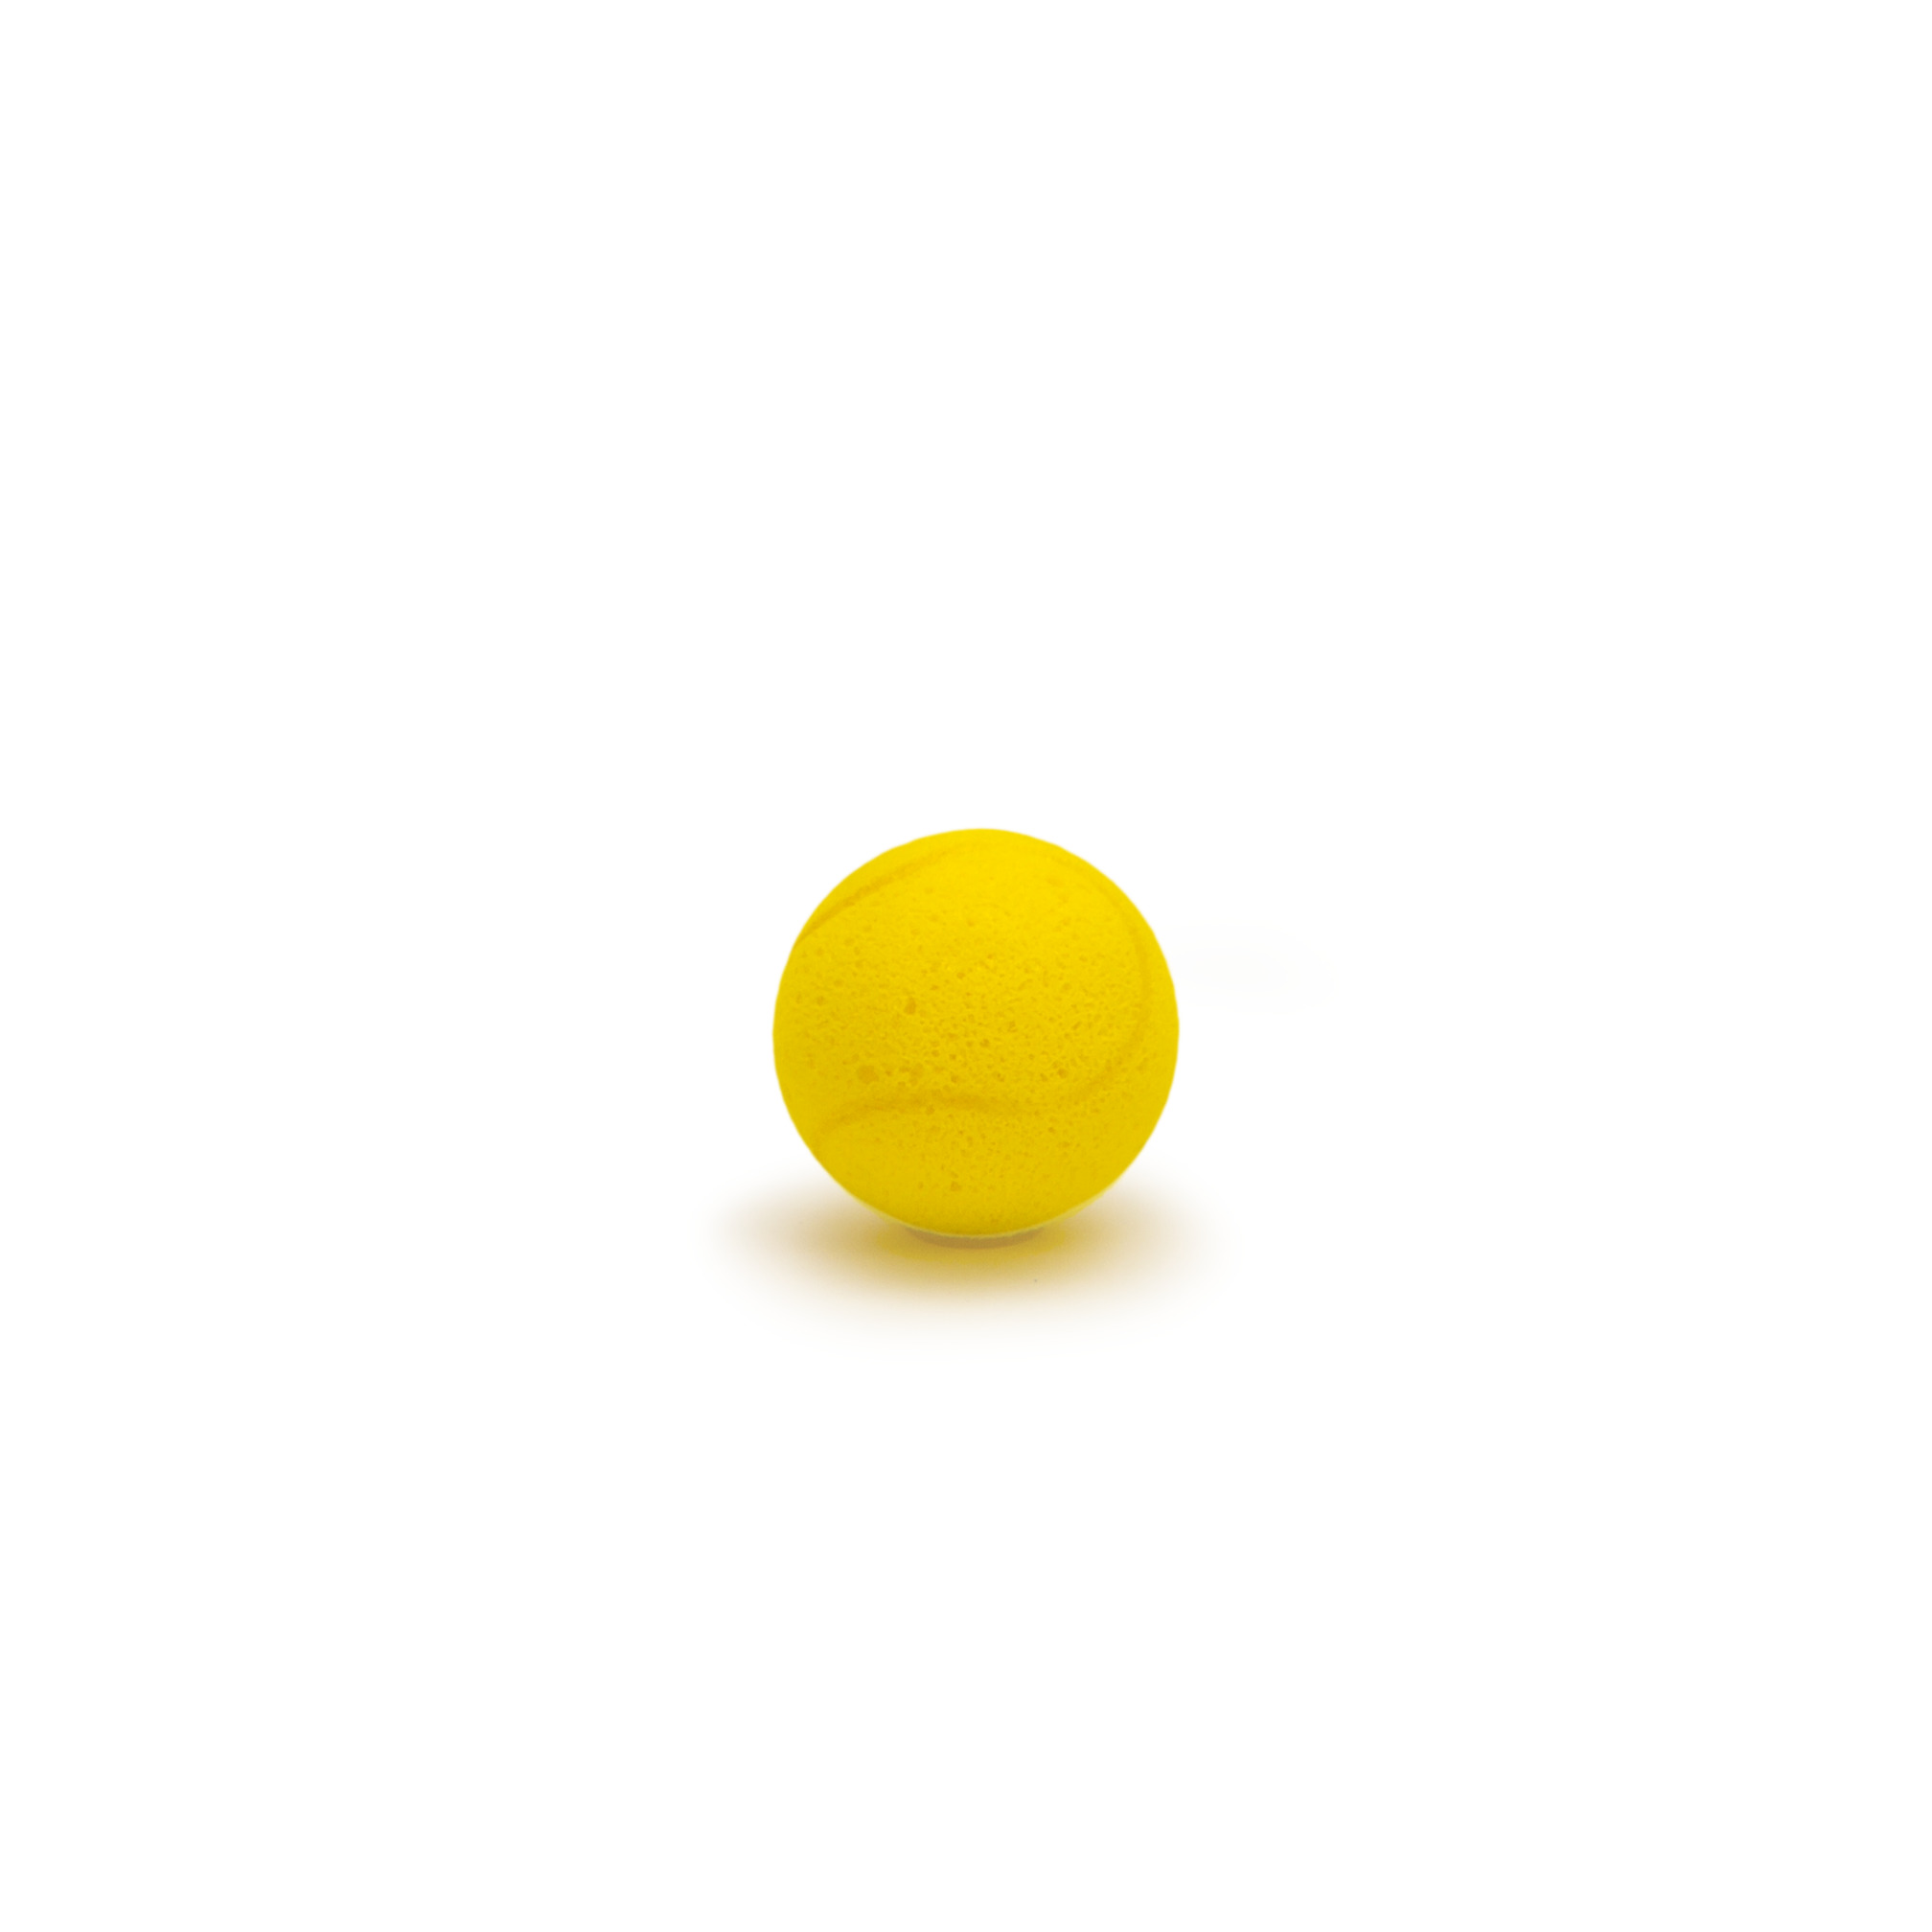 Tennisbal foam zonder huid, ø 7 cm, geel